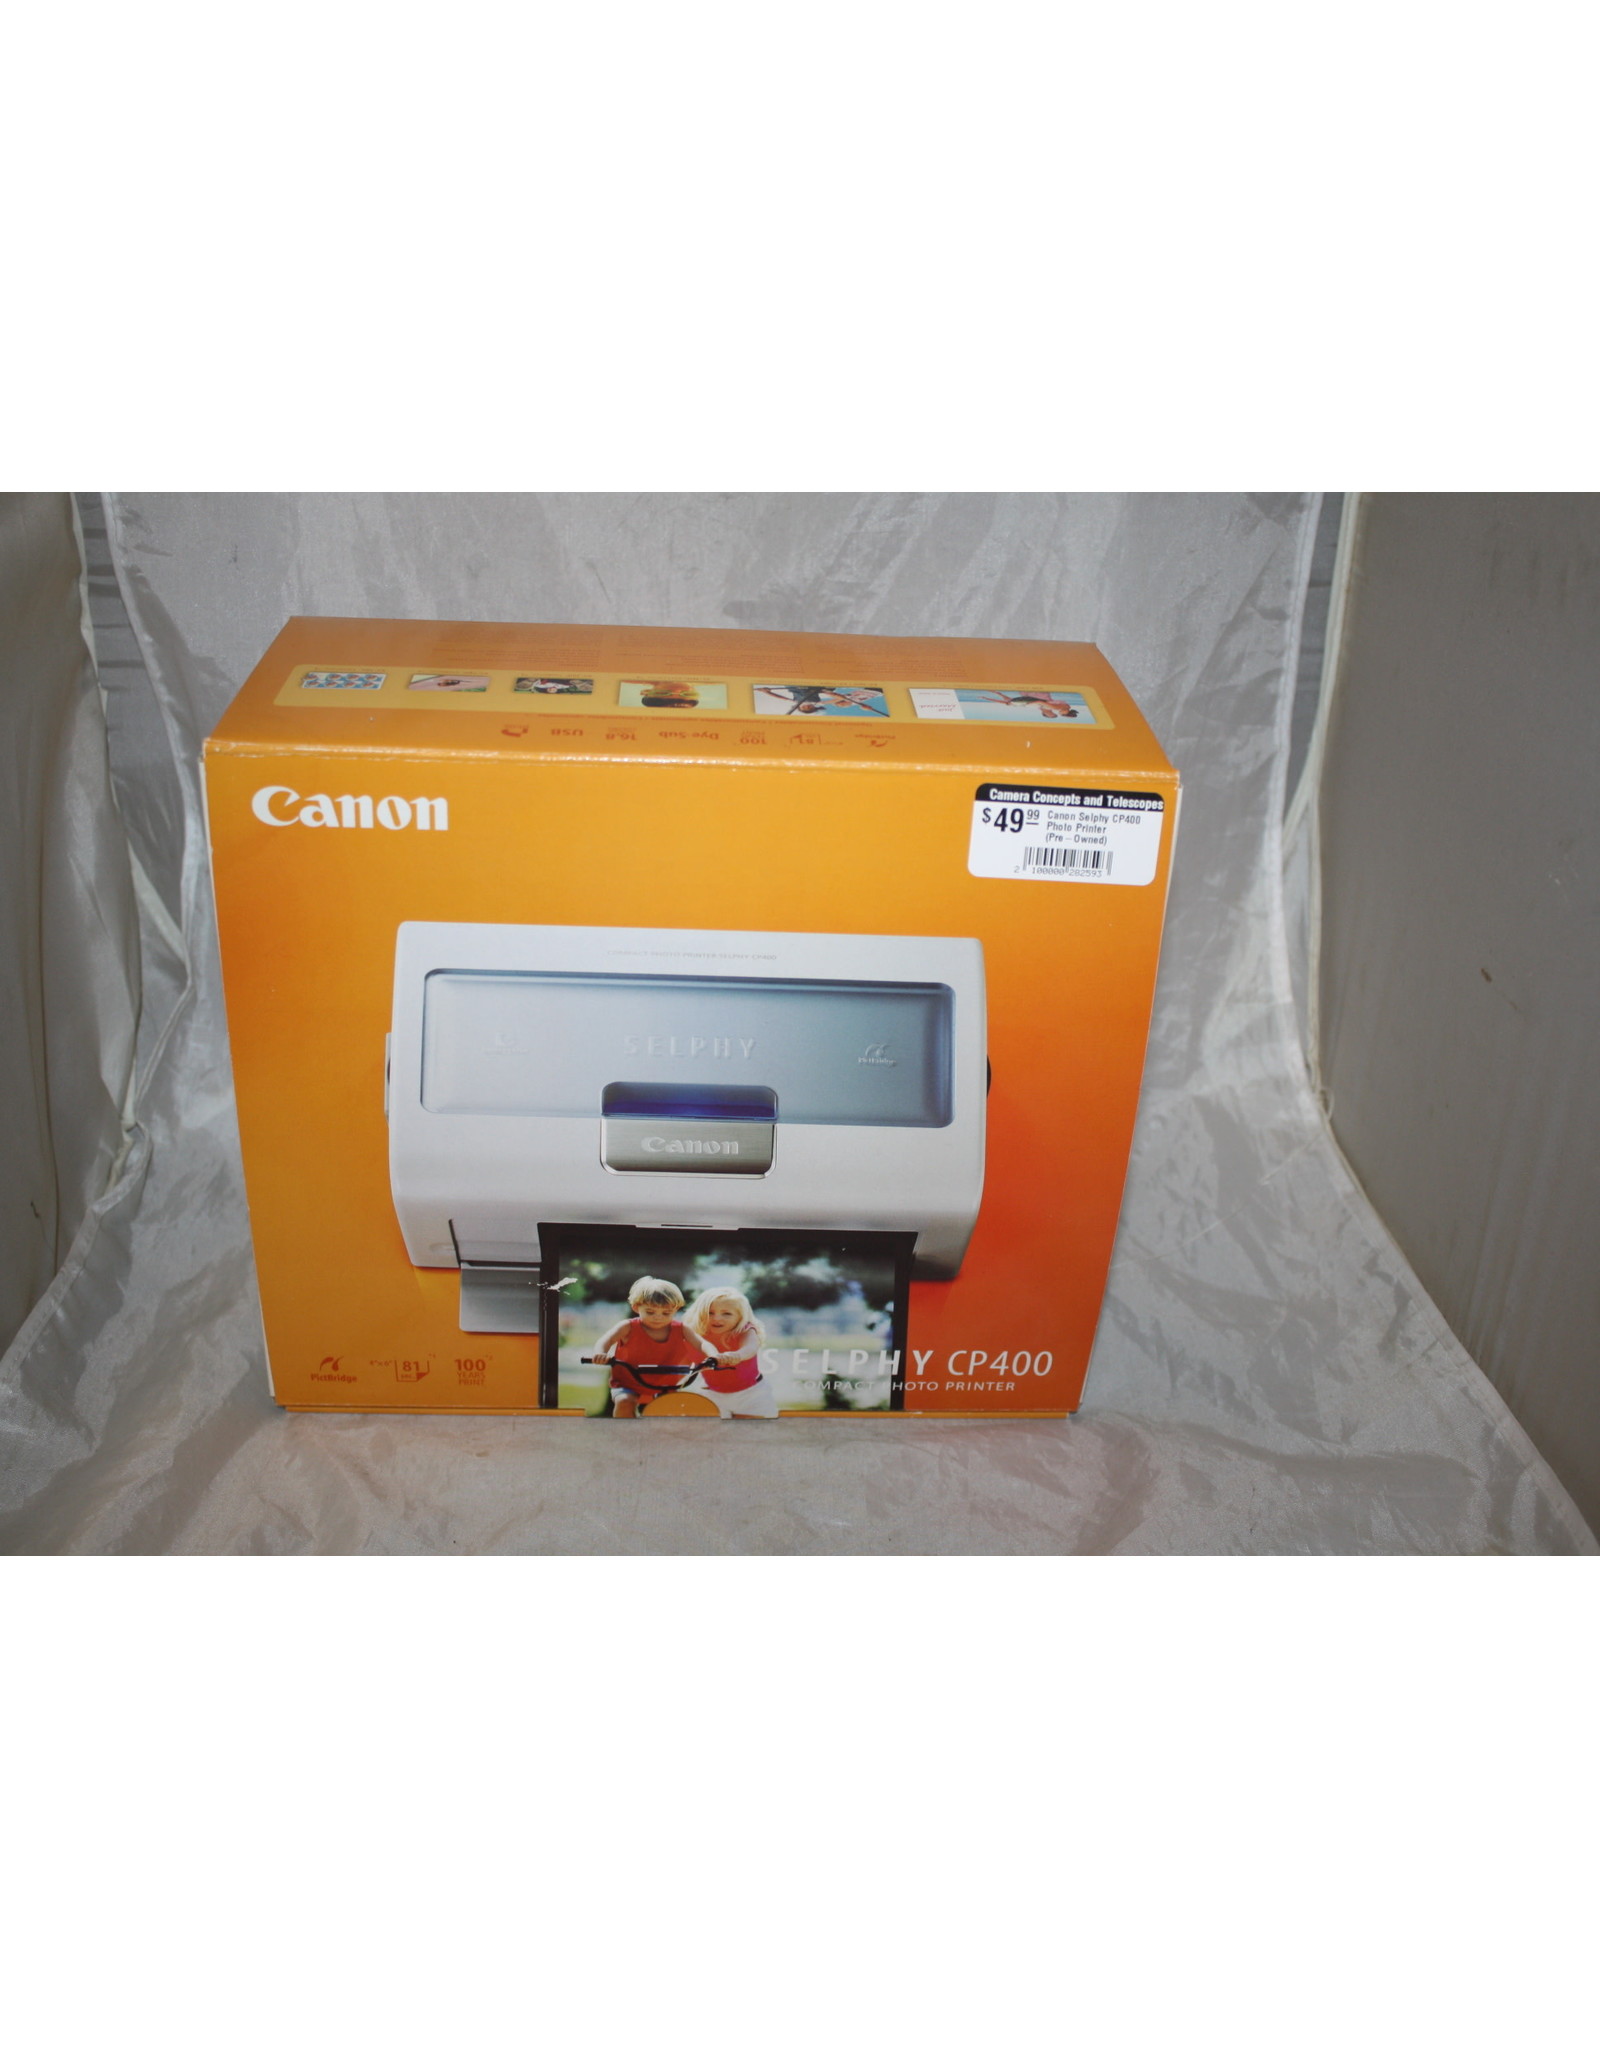 Canon Canon Selphy CP400 Photo Printer (Pre-Owned)